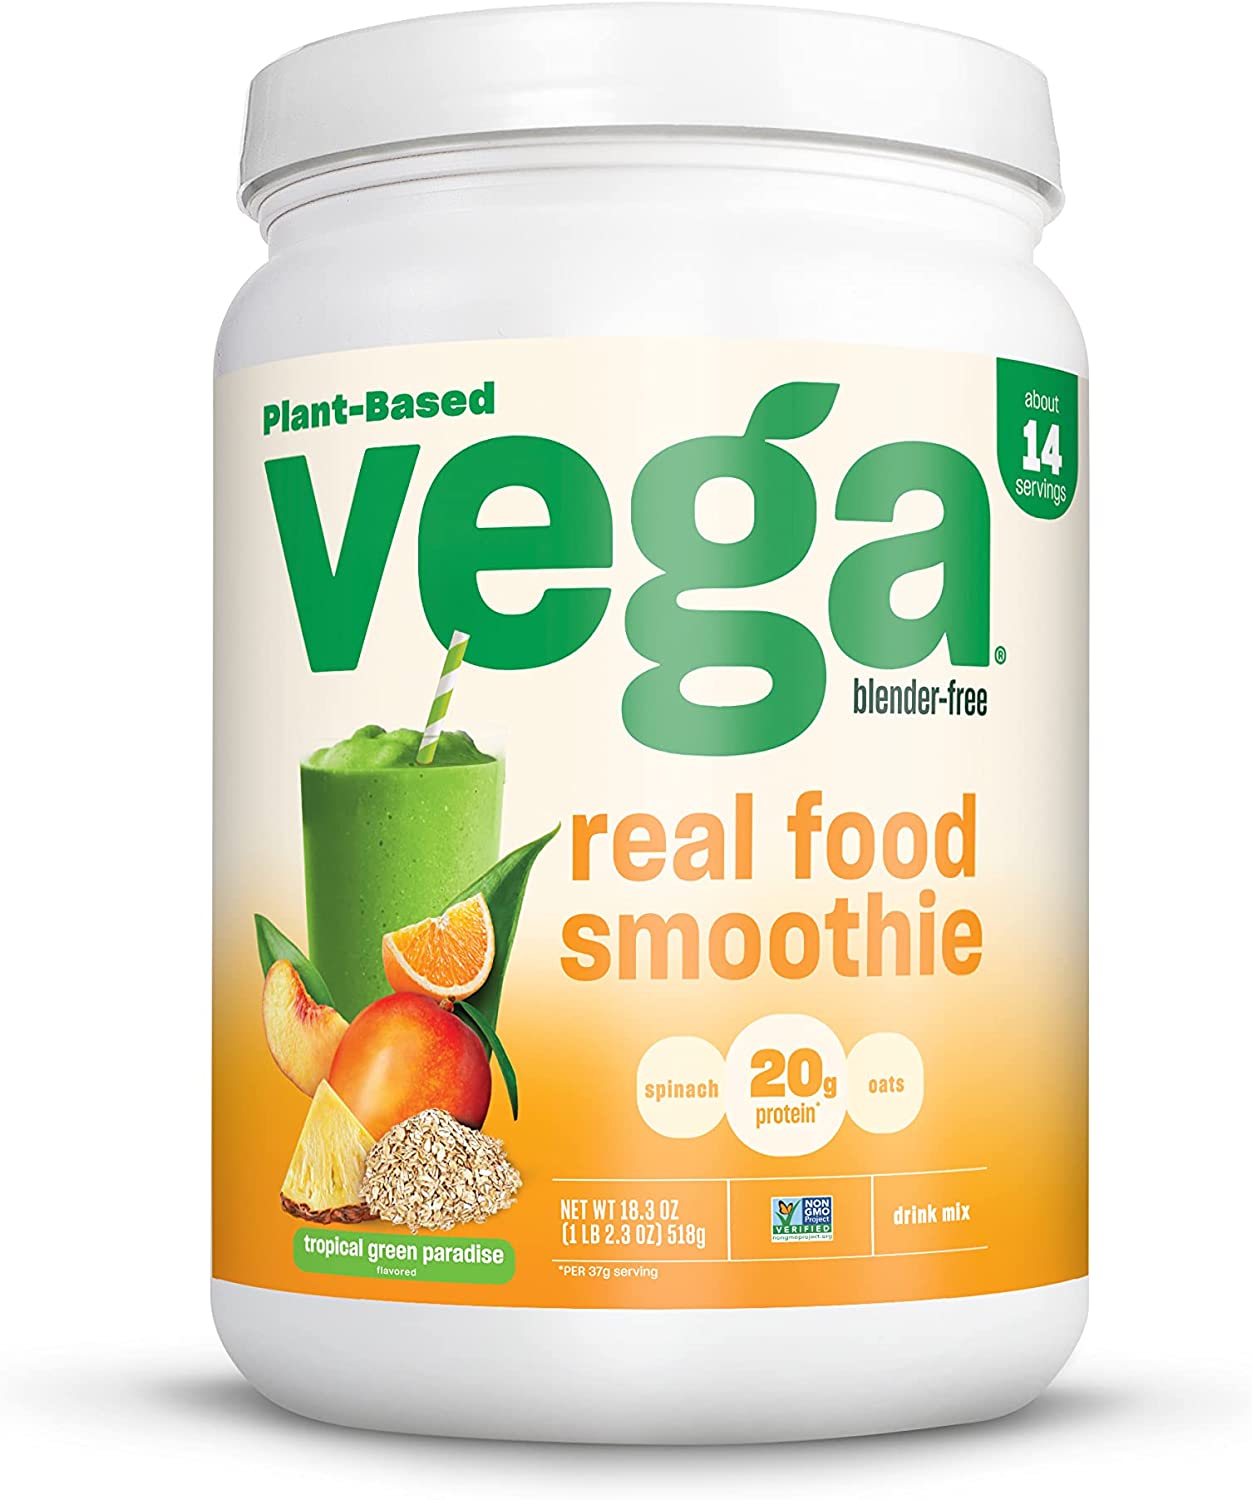 Vega Blender-Free Protein Drink Mix, Tropical Green Paradise